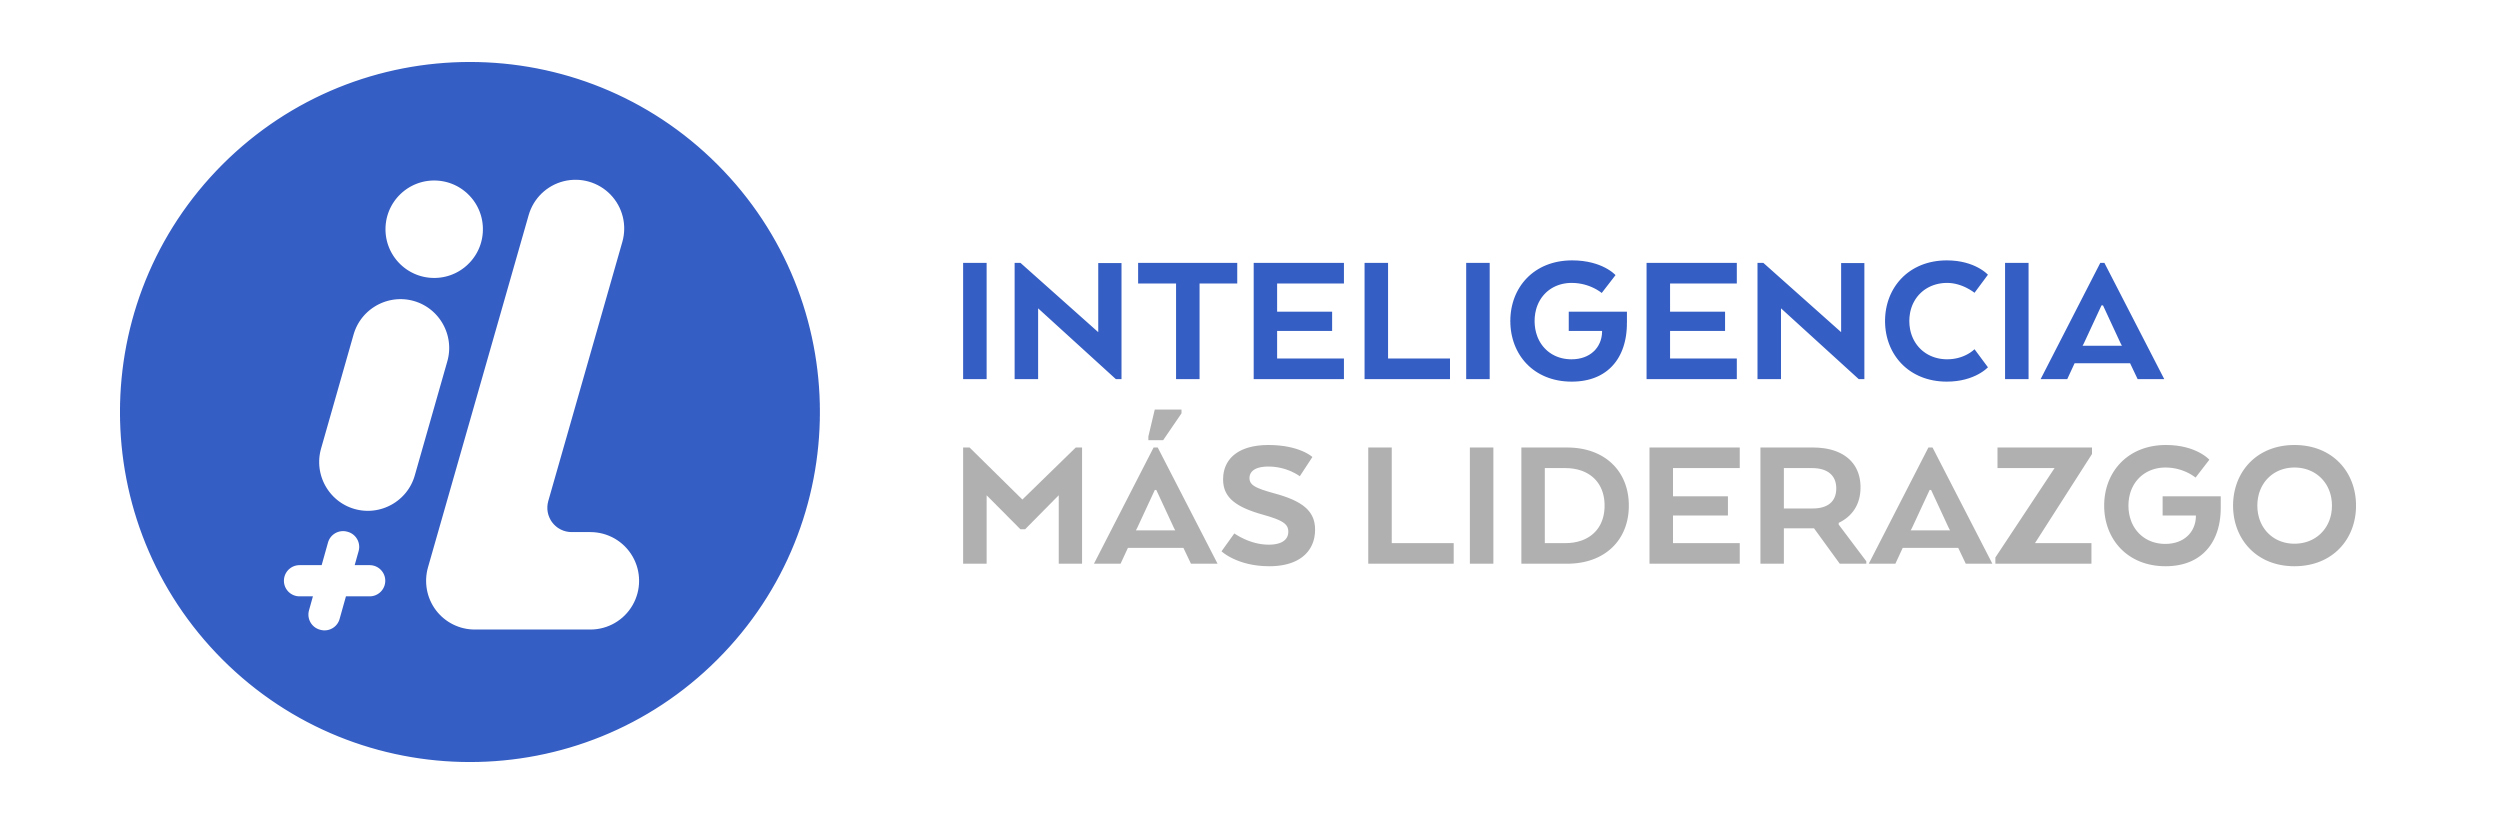 Inteligencia__liderazgo